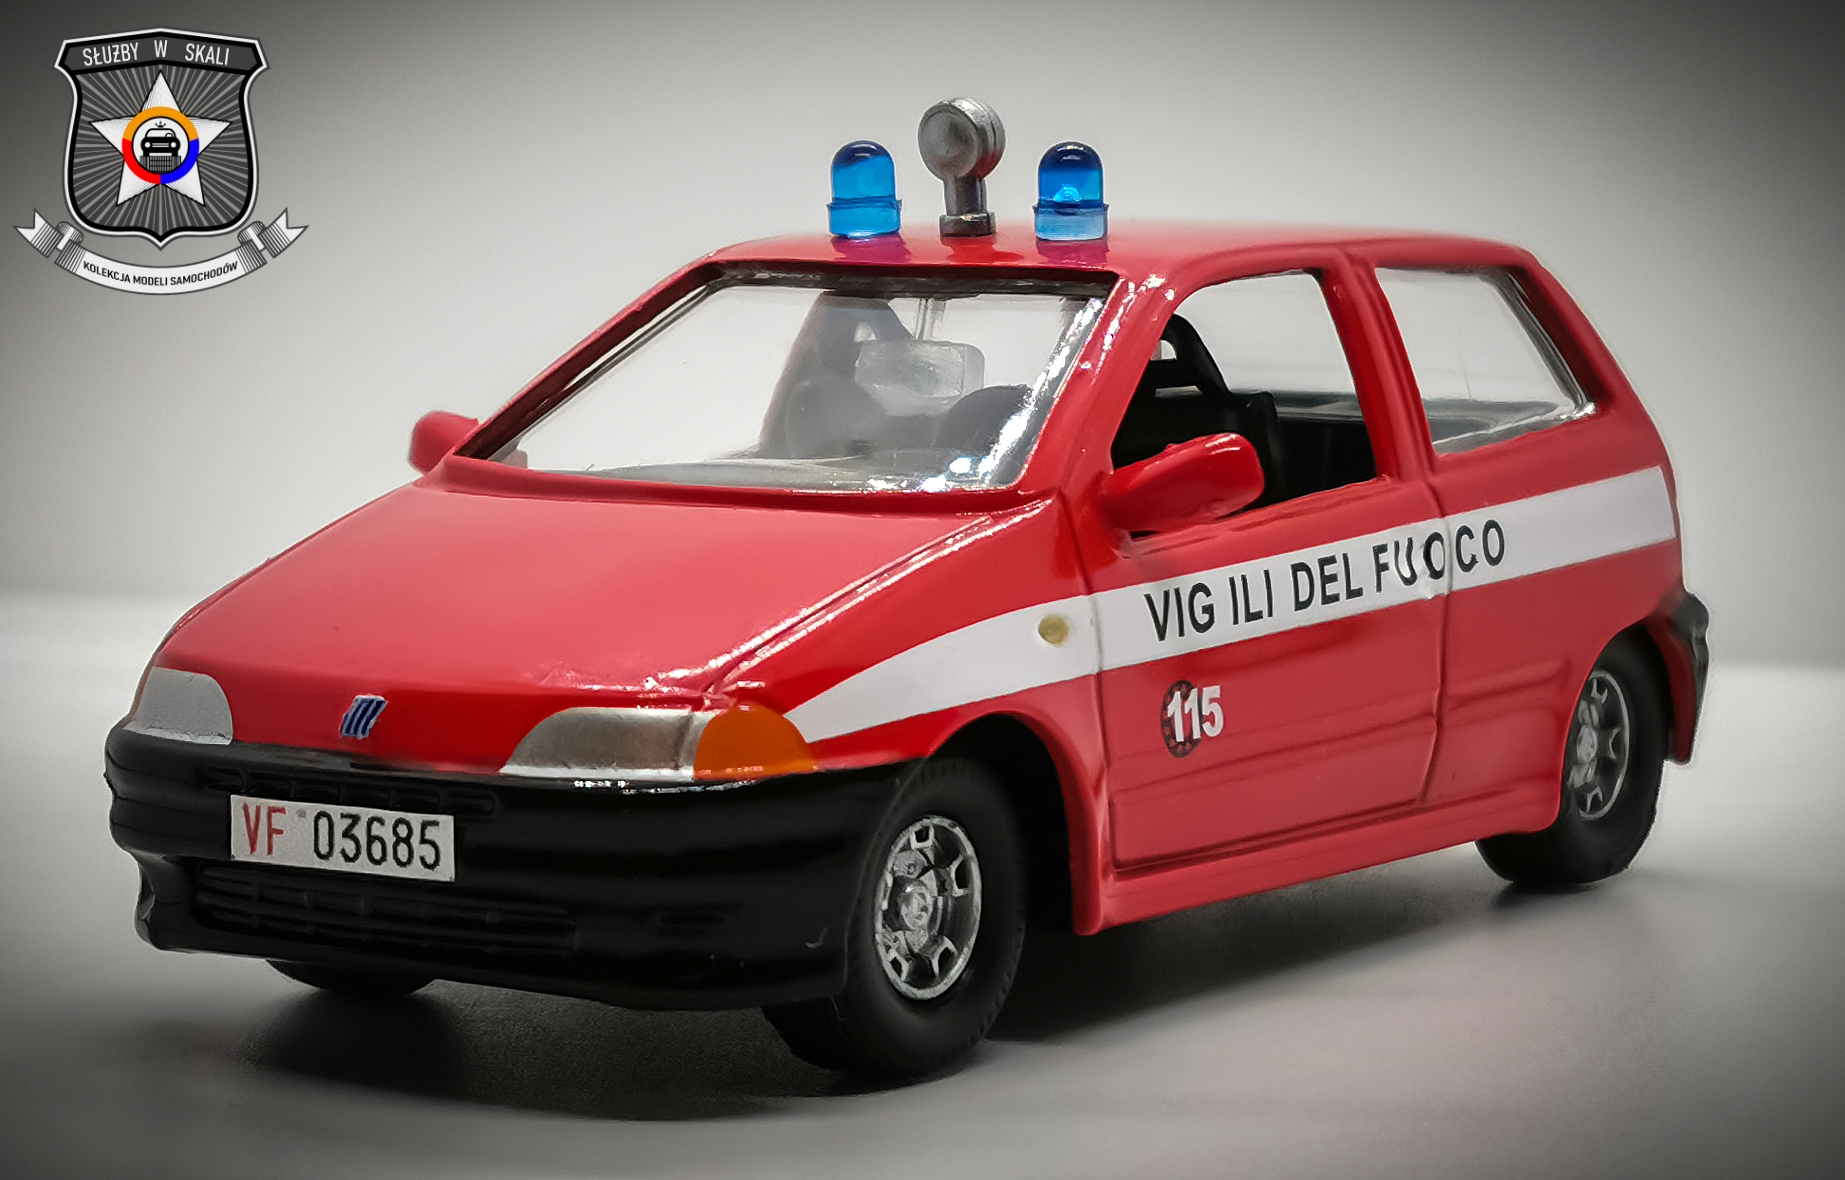 Bburago - BURAGO Voiture Fiat Ducato Sapeurs Pompiers de Paris en